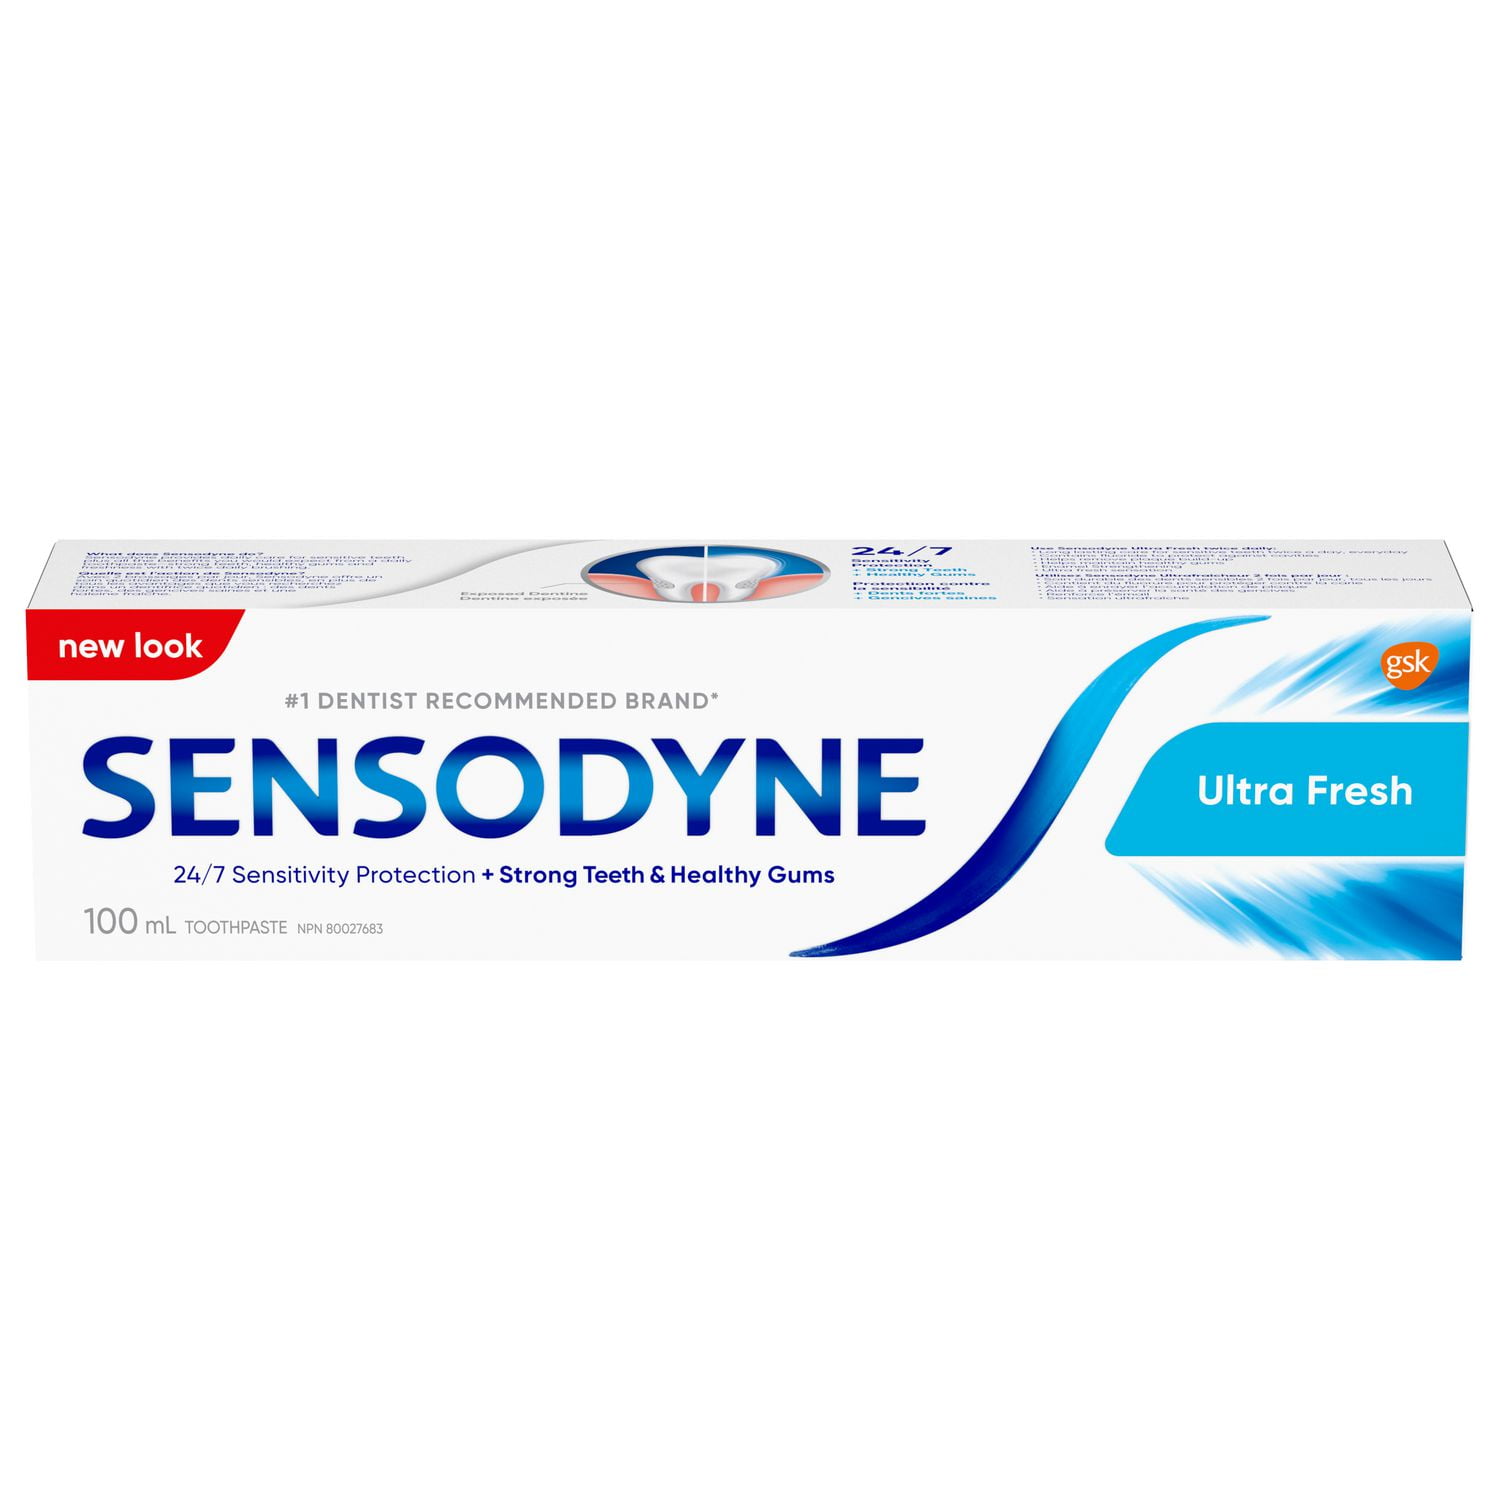 Sensodyne Beat Sensitivity Fast Sensodyne Rapid Relief Ad - Advert Gallery